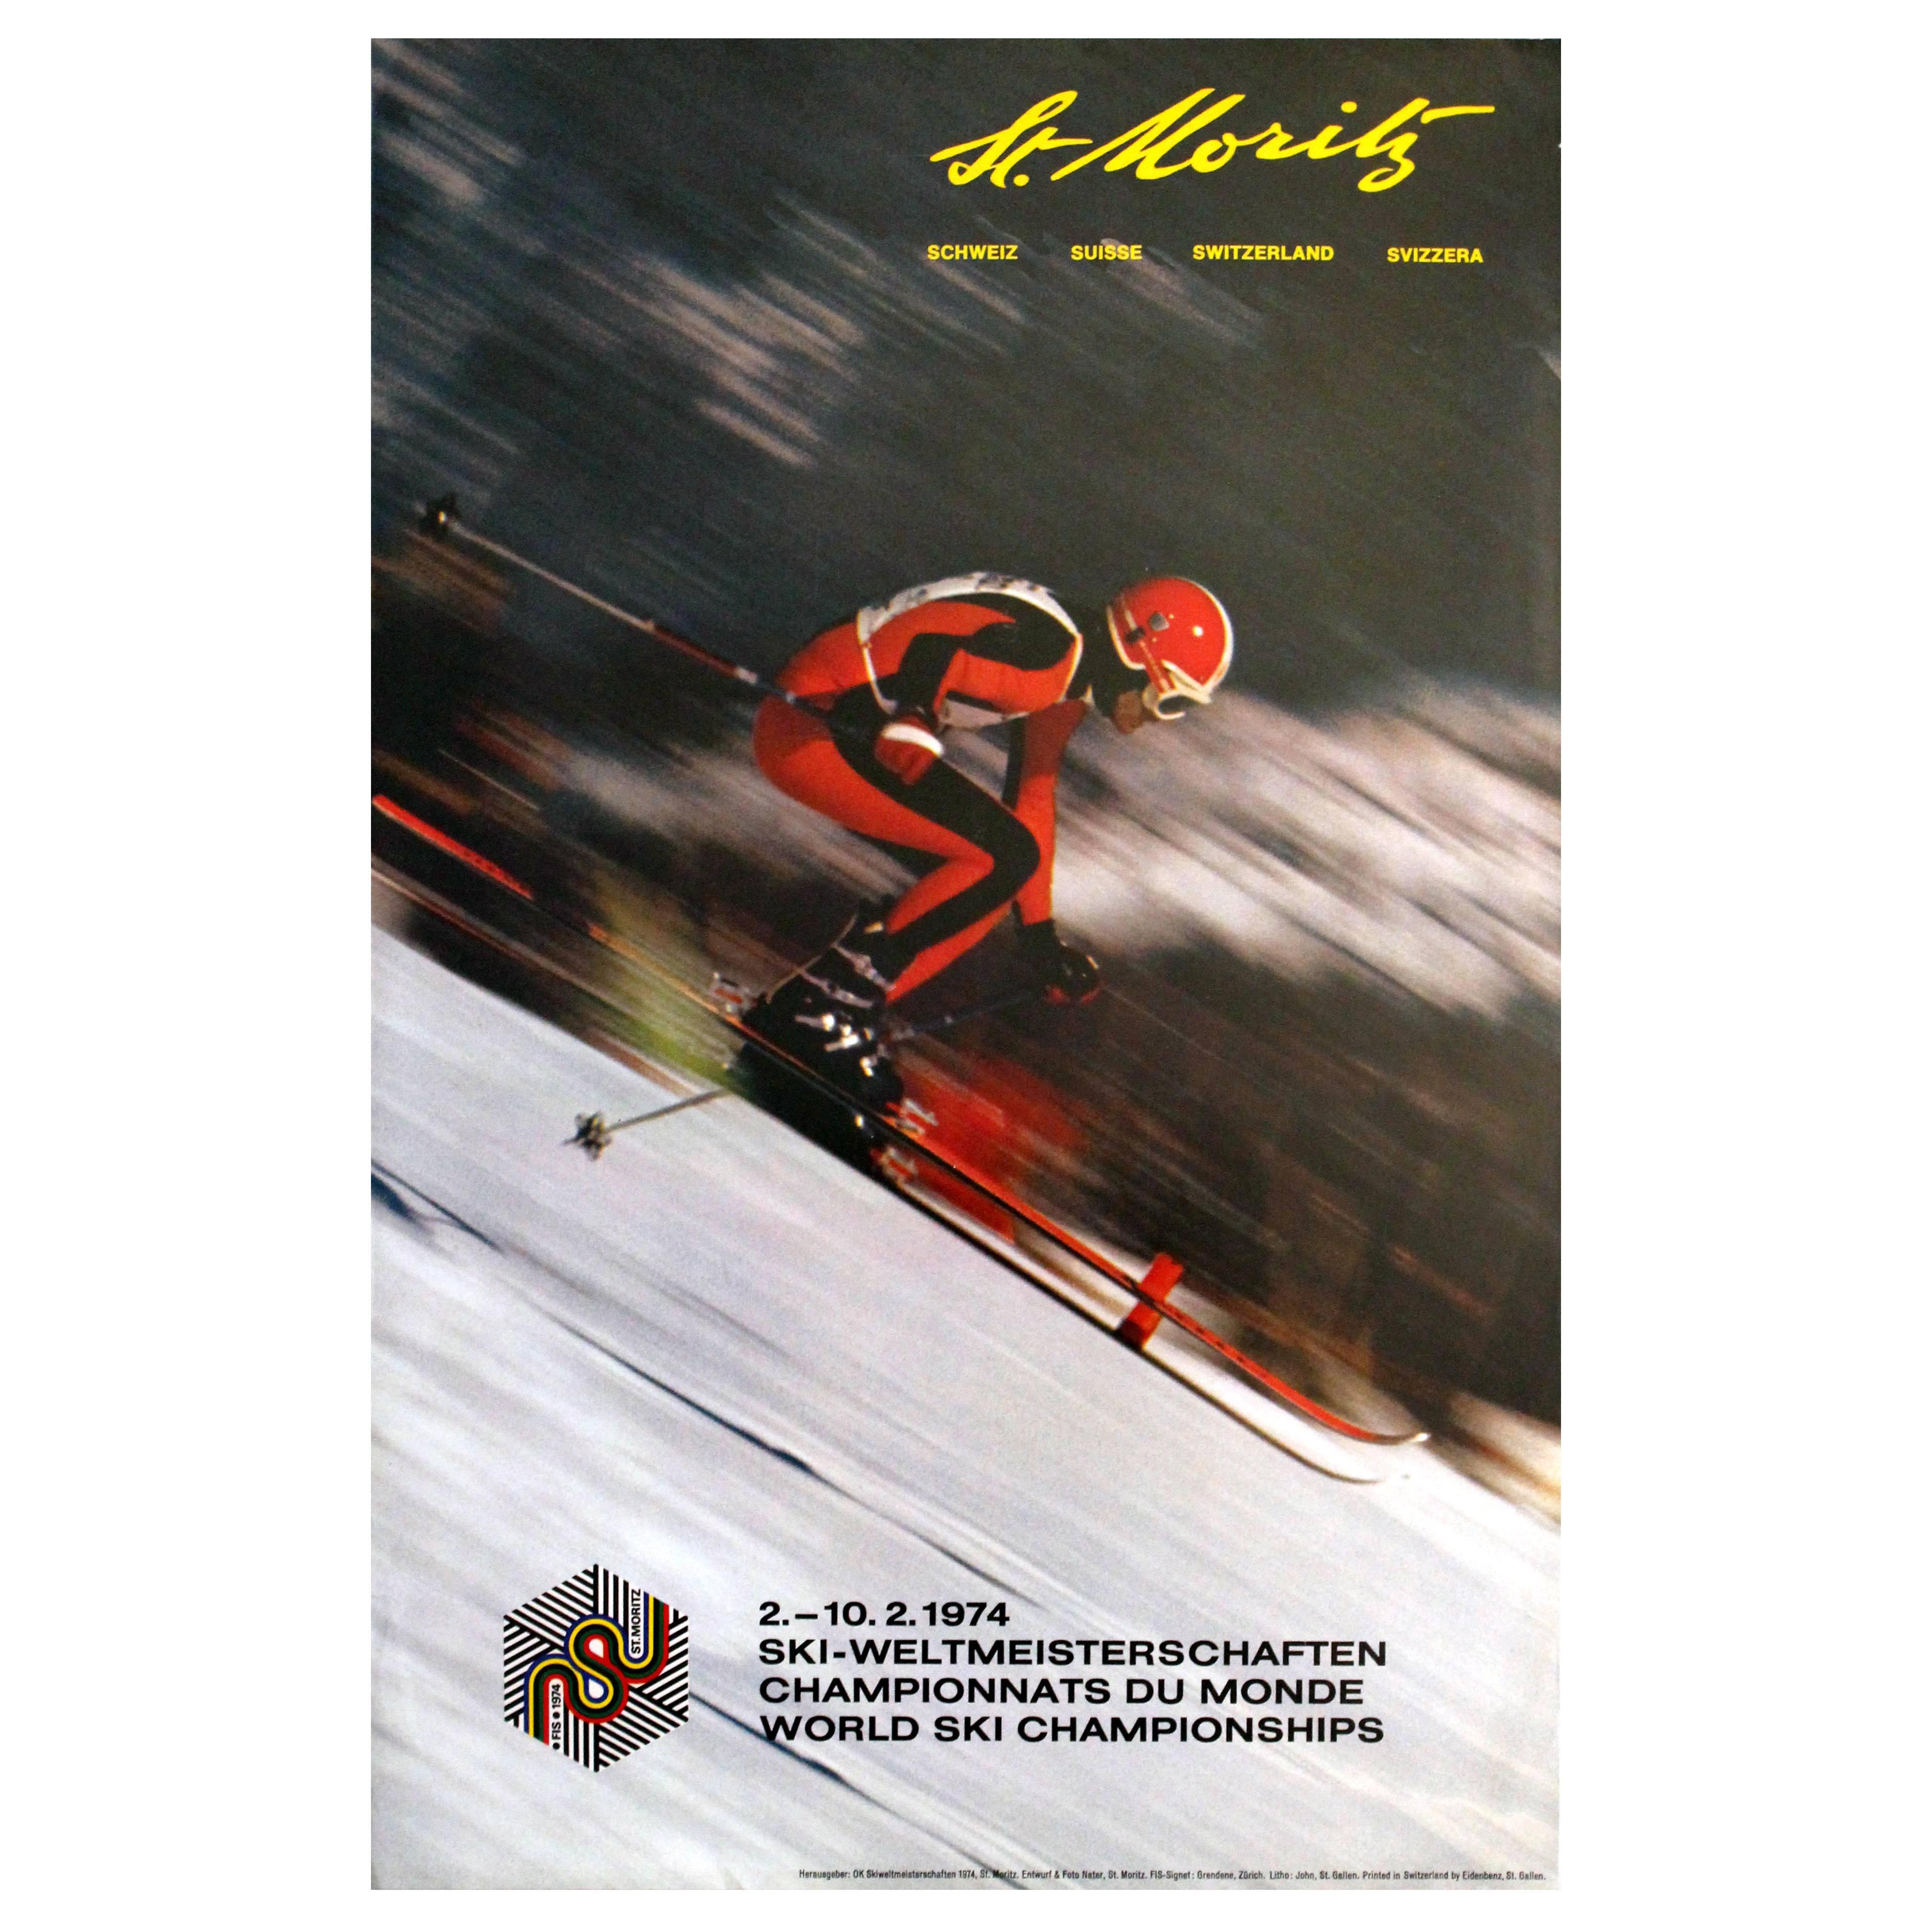 Original Vintage Skiing Poster, World Ski Championships “St Moritz Switzerland”